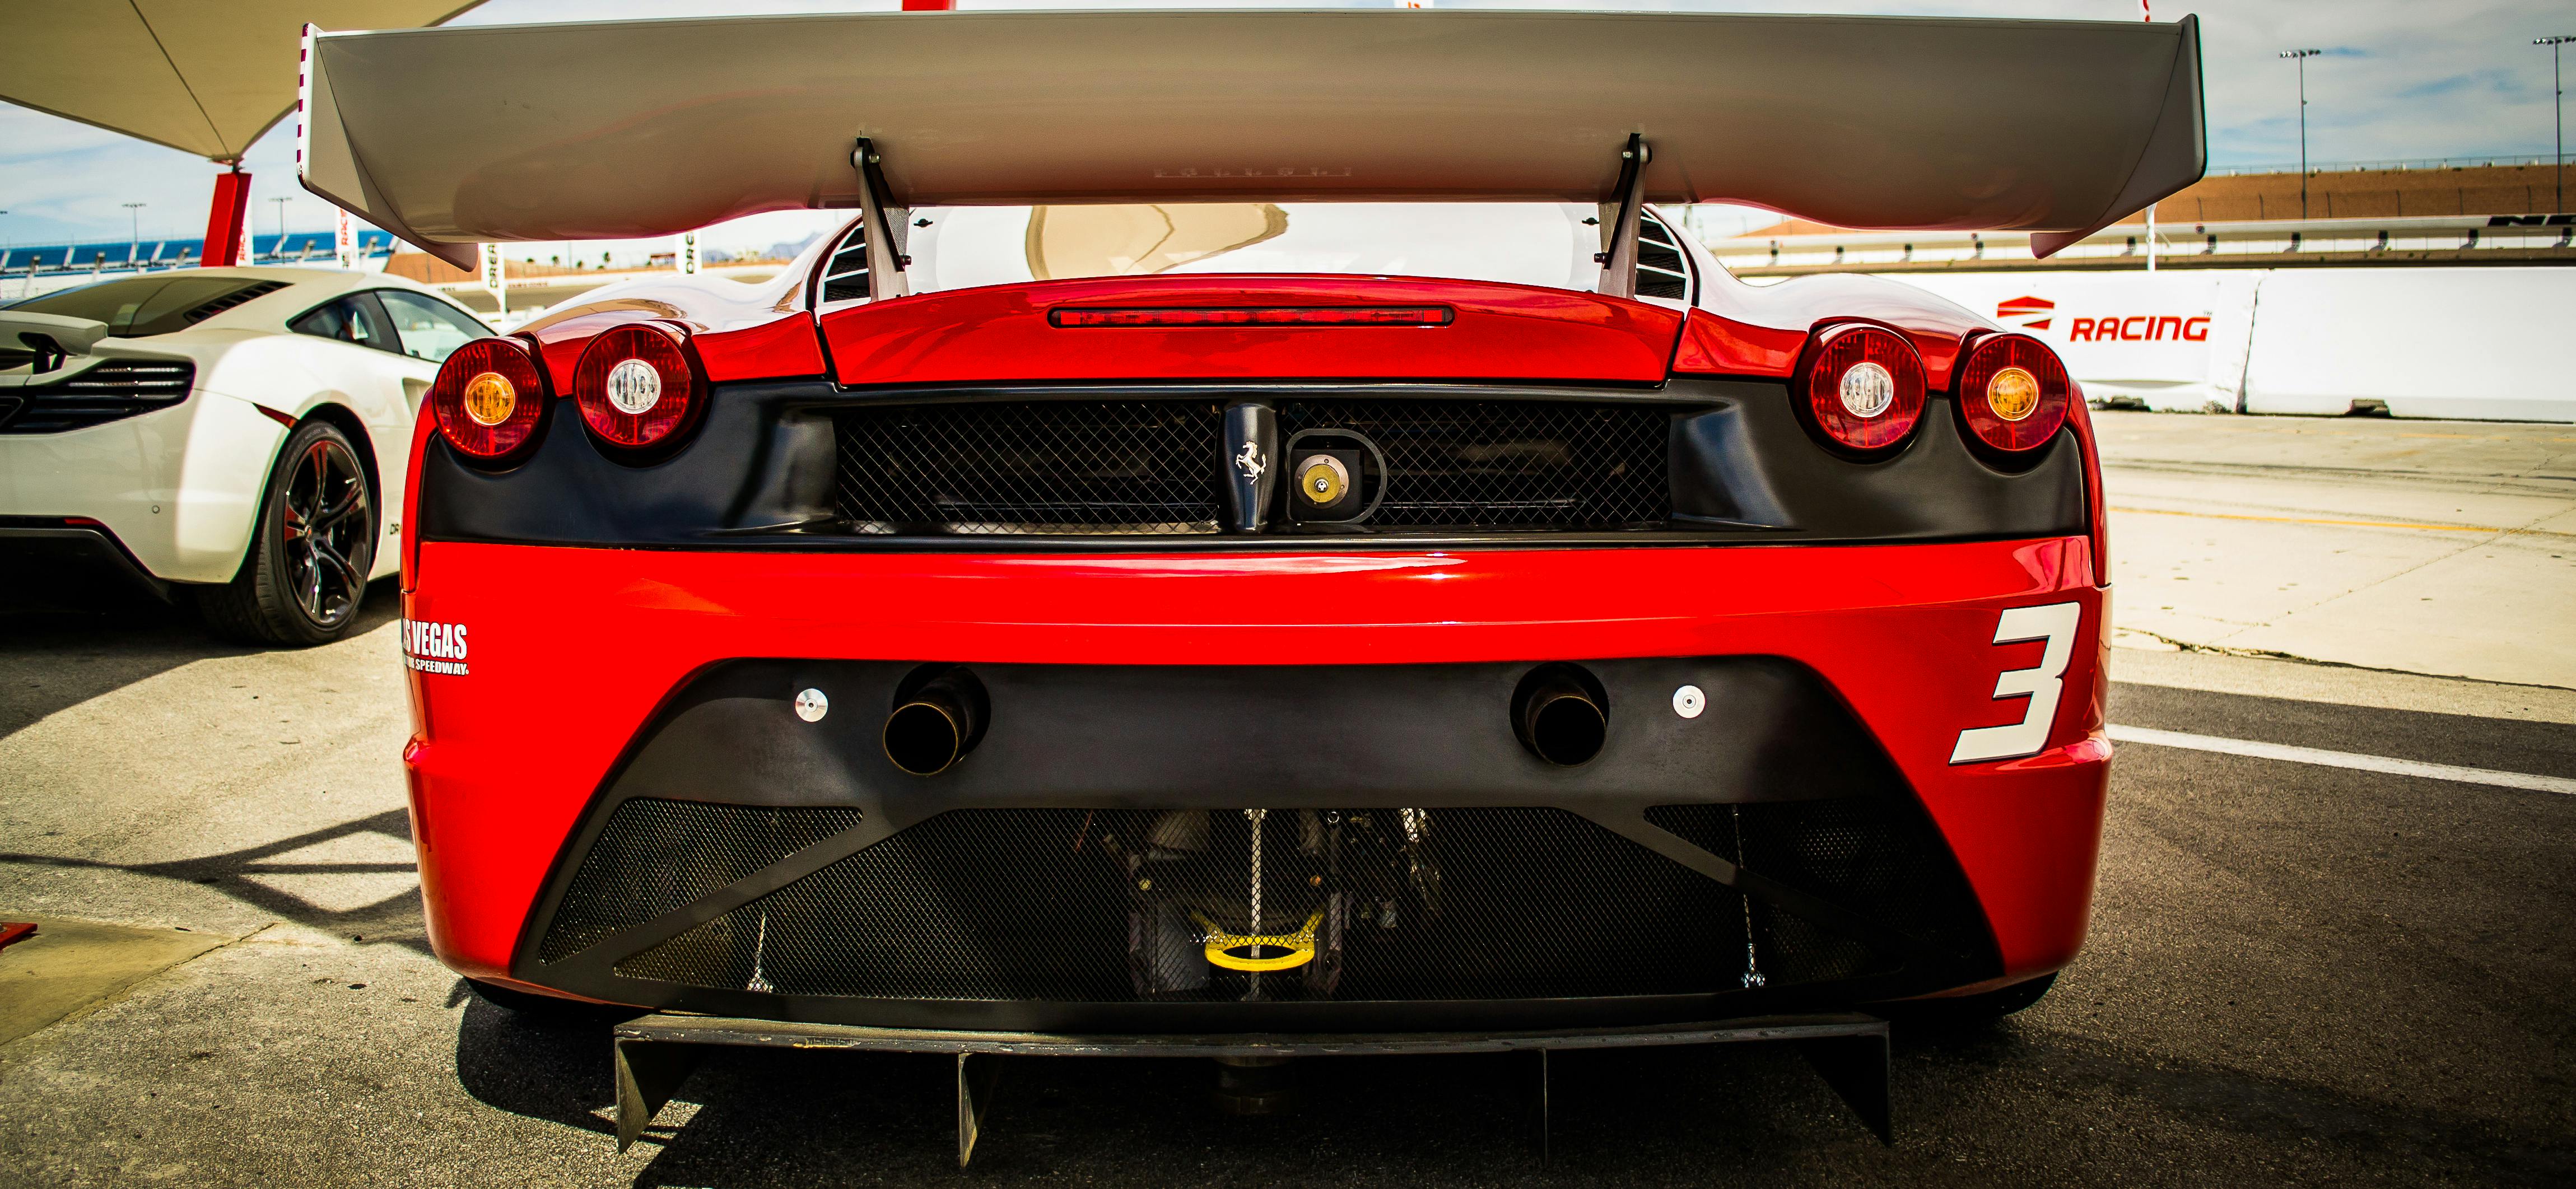 Ferrari Photos, Download The BEST Free Ferrari Stock Photos & HD Images